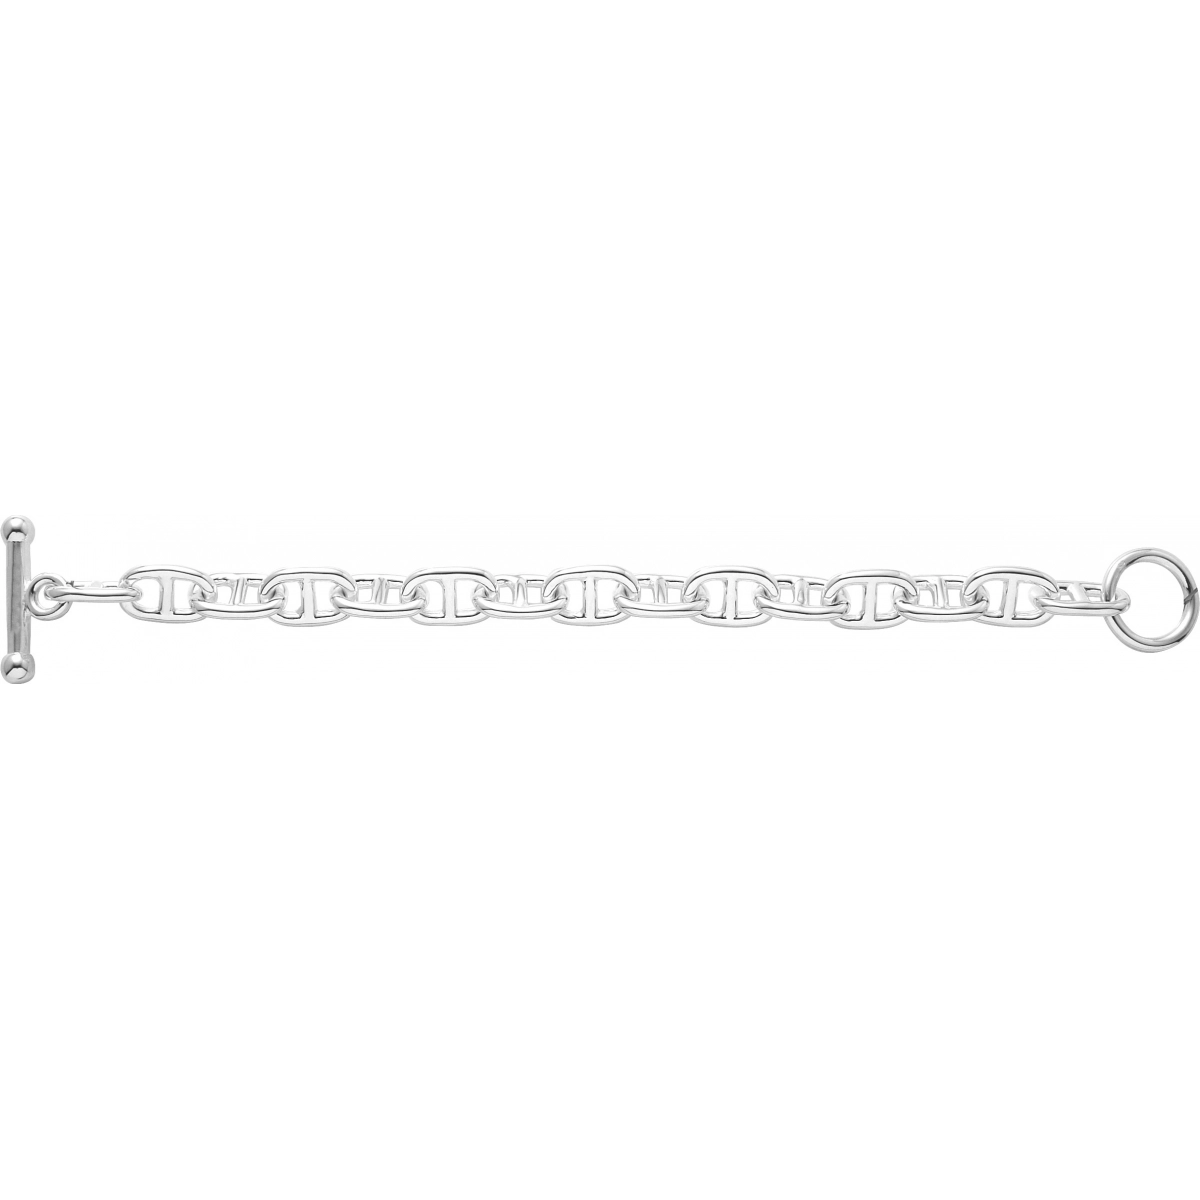 Bracelet rh925 Silver - Size: 20  Lua Blanca  301518B.20